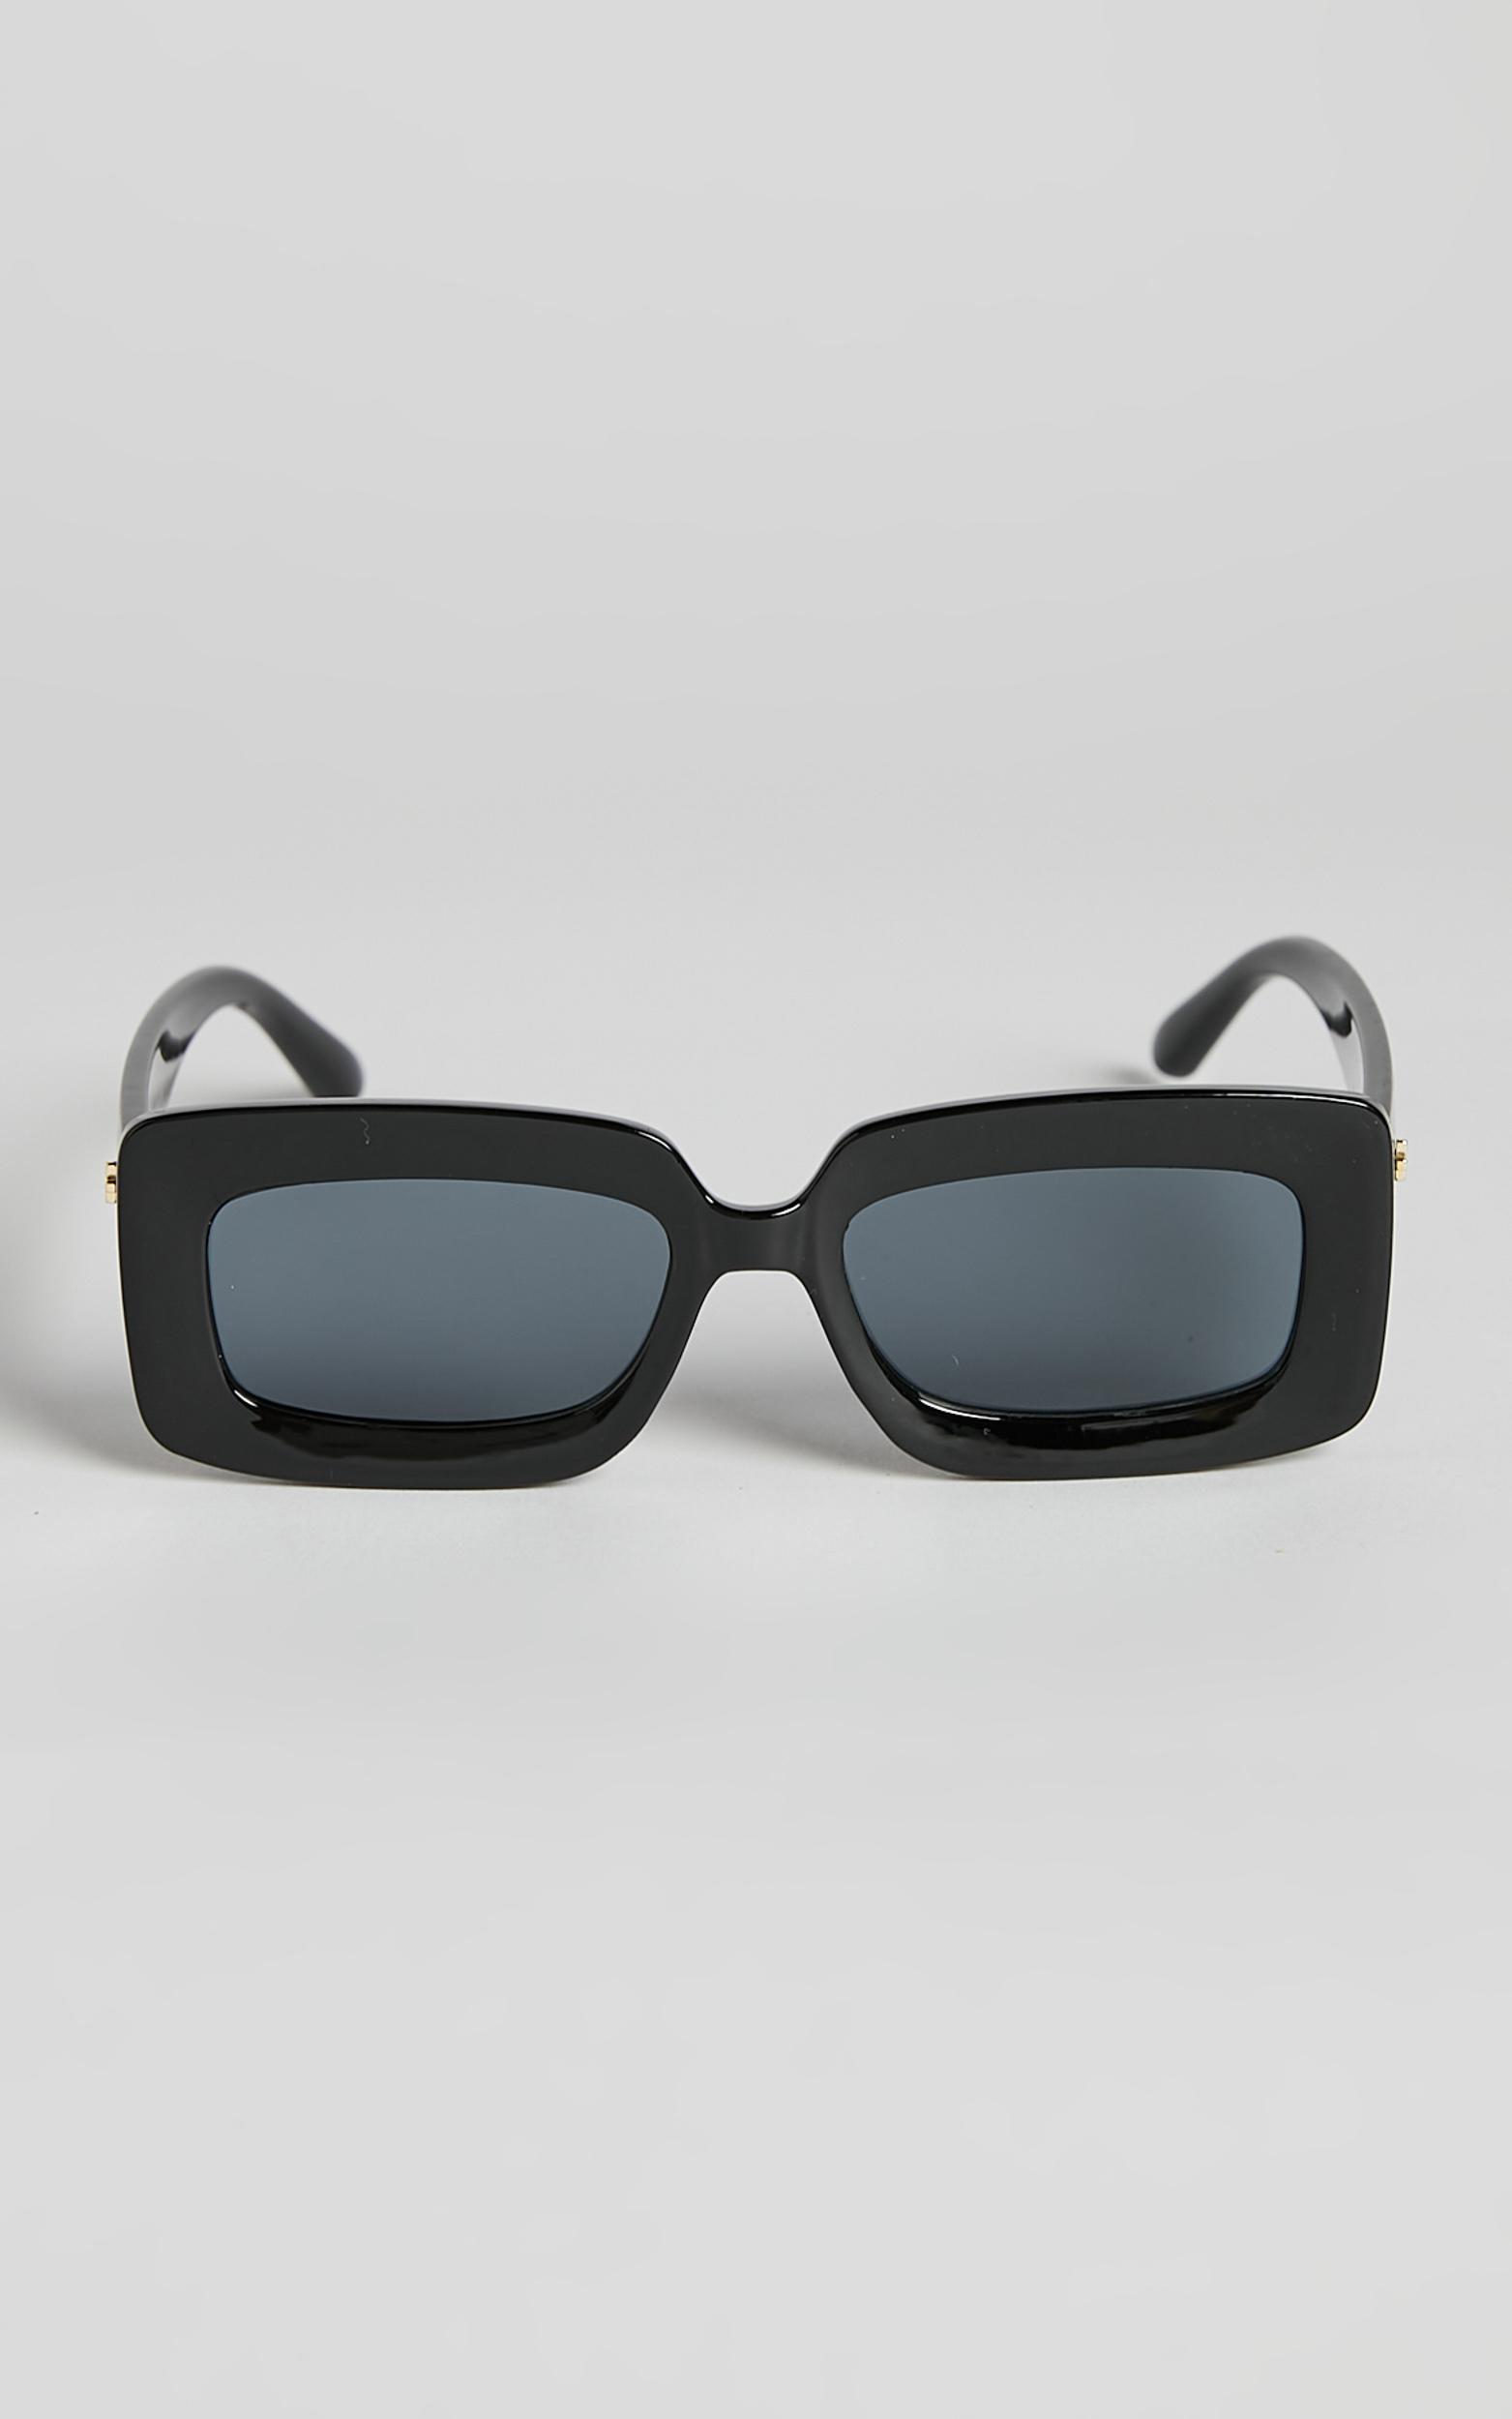 Peta and Jain - Blurred Sunglasses in Black - NoSize, BLK1, hi-res image number null